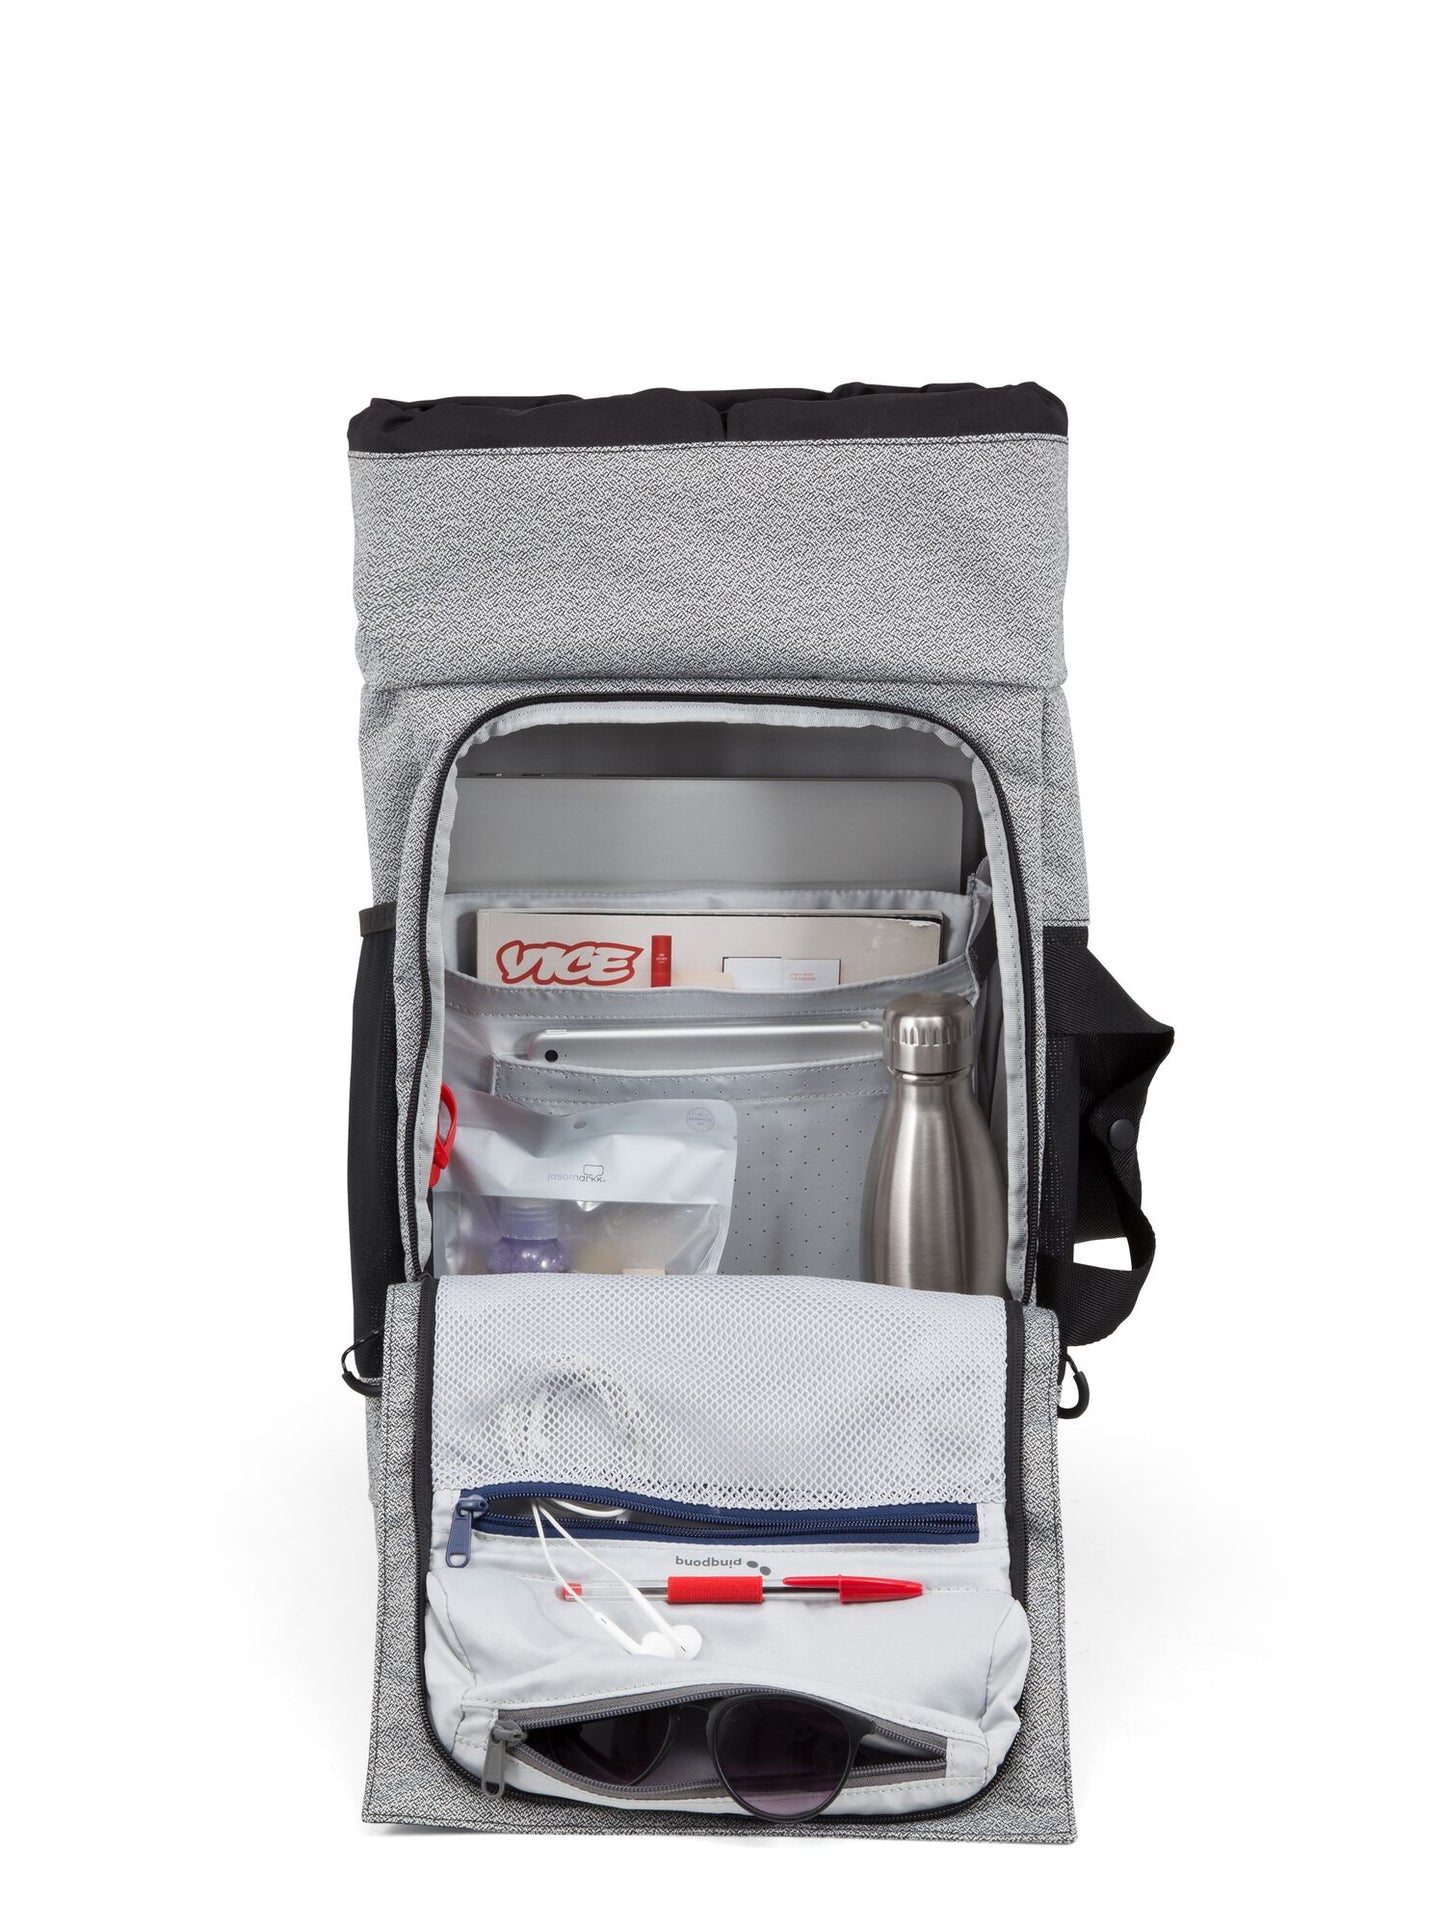 pinqponq-backpack-Blok-Medium-Vivid-Monochrome-open